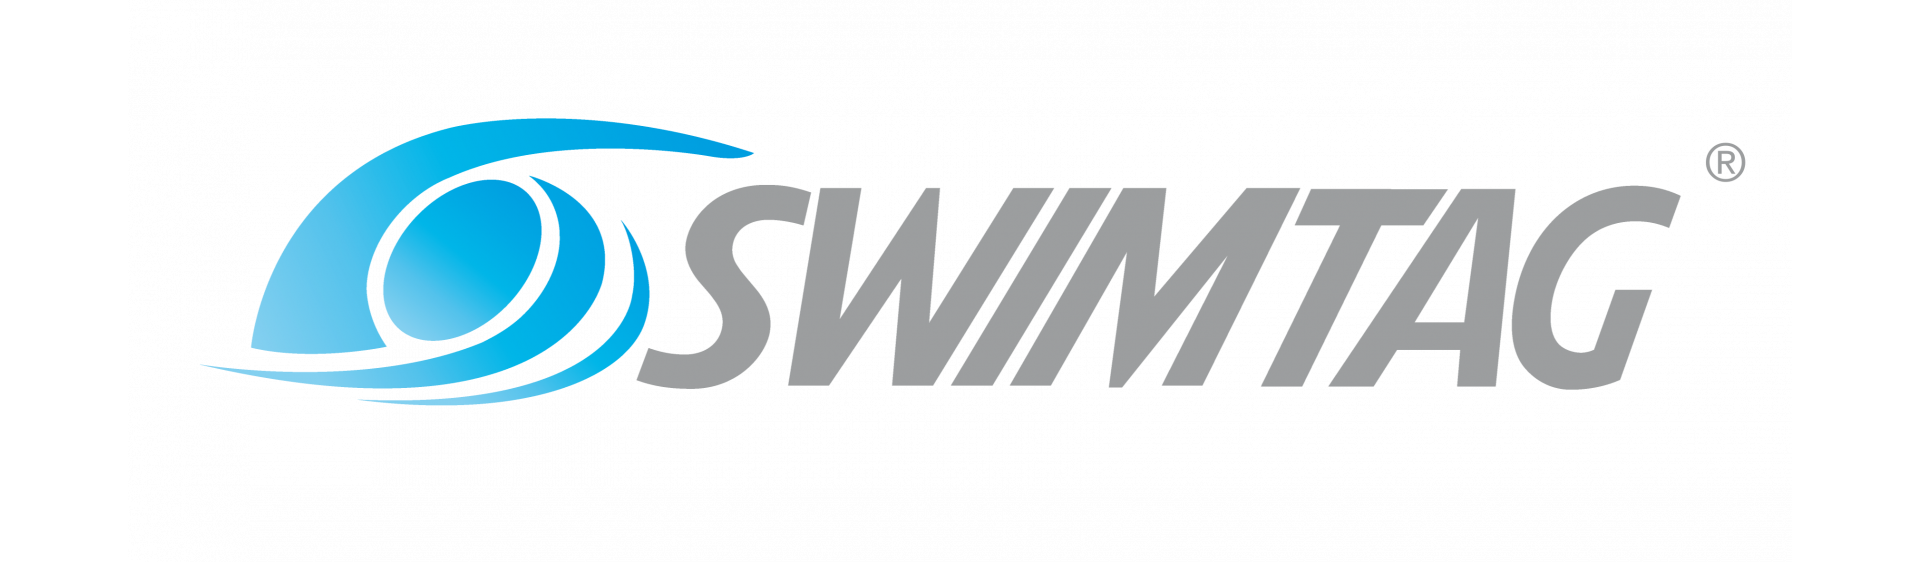 Swimtag Logo